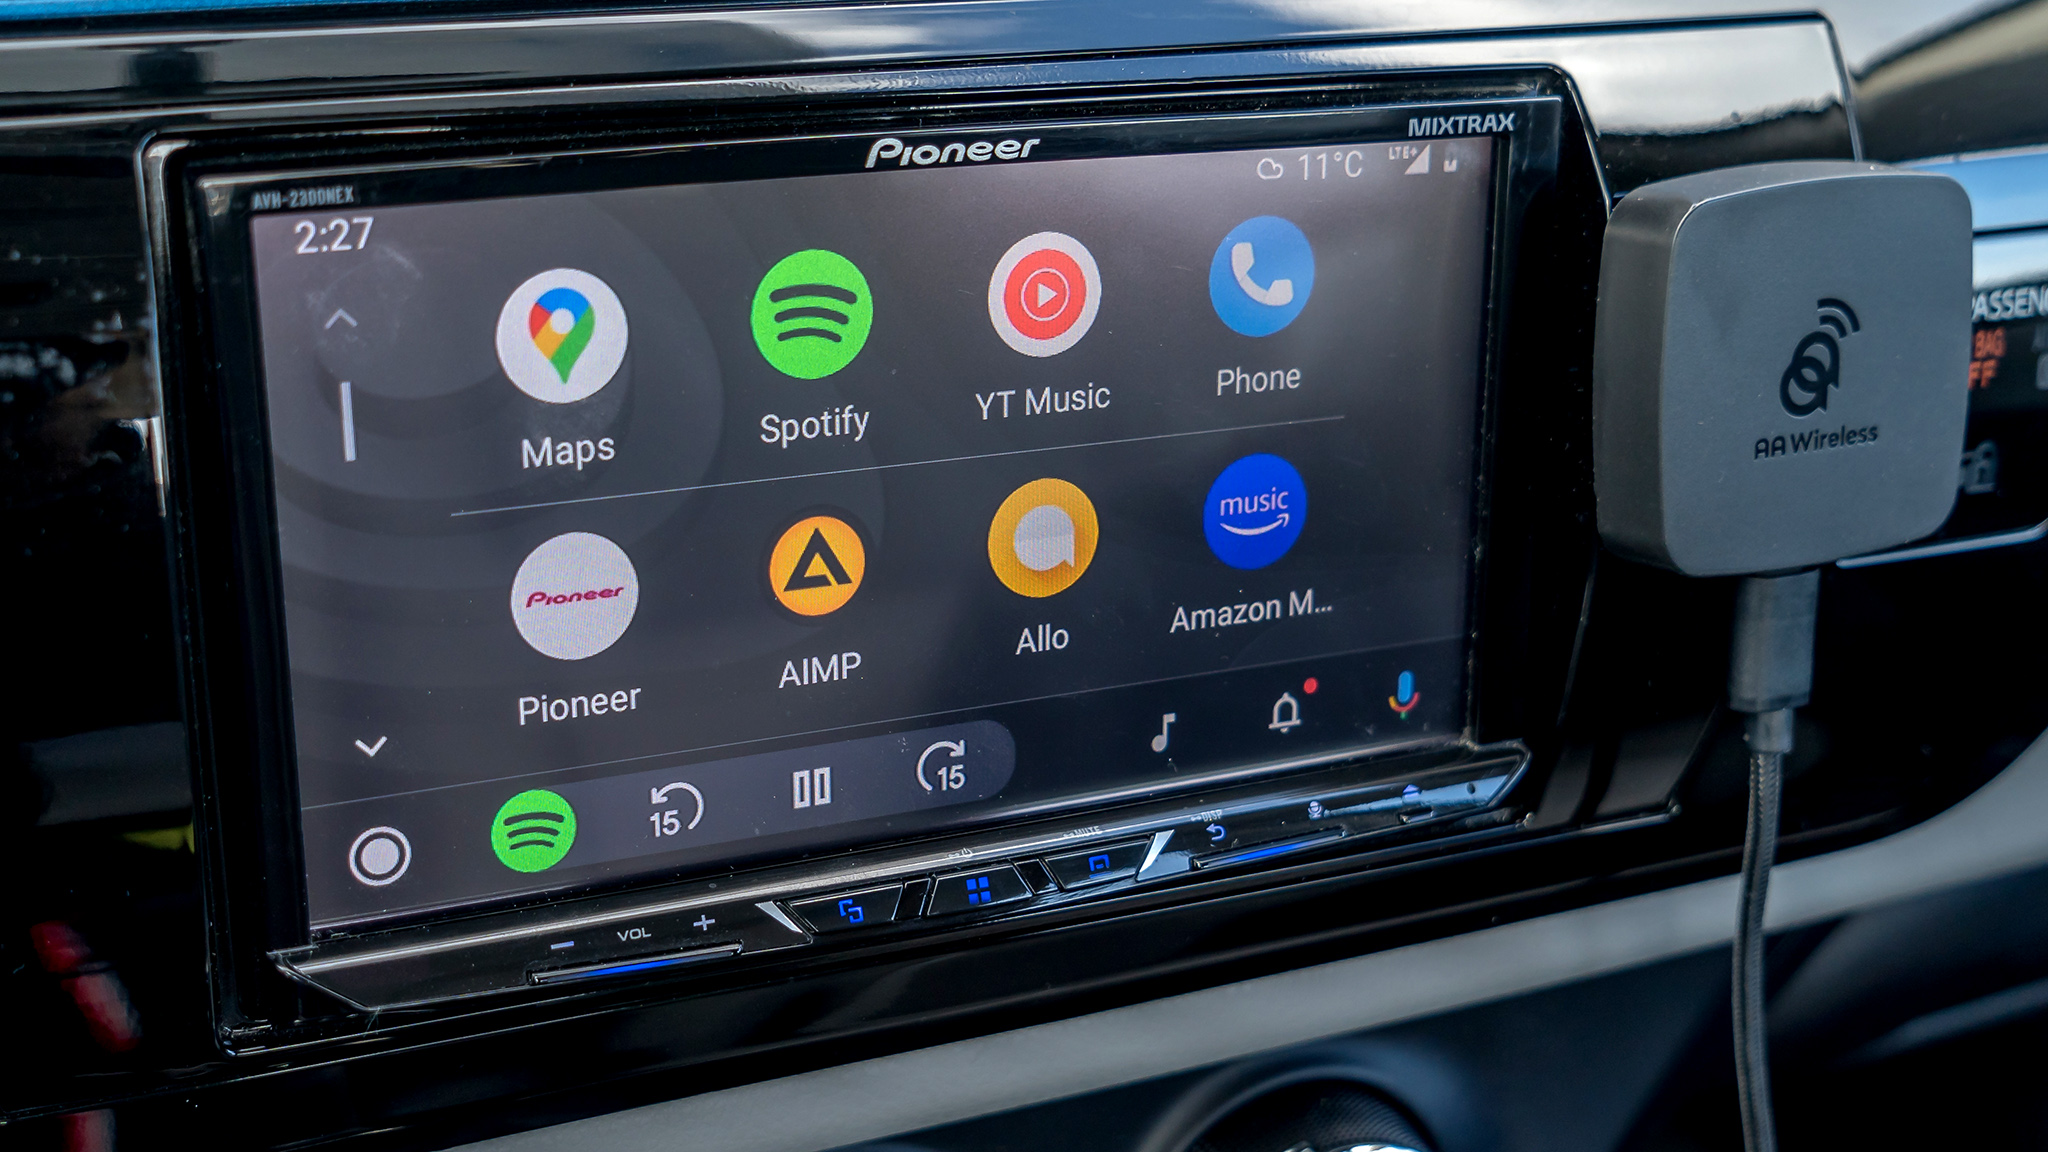 AAWireless - Wireless Android Auto/Apple CarPlay adapter